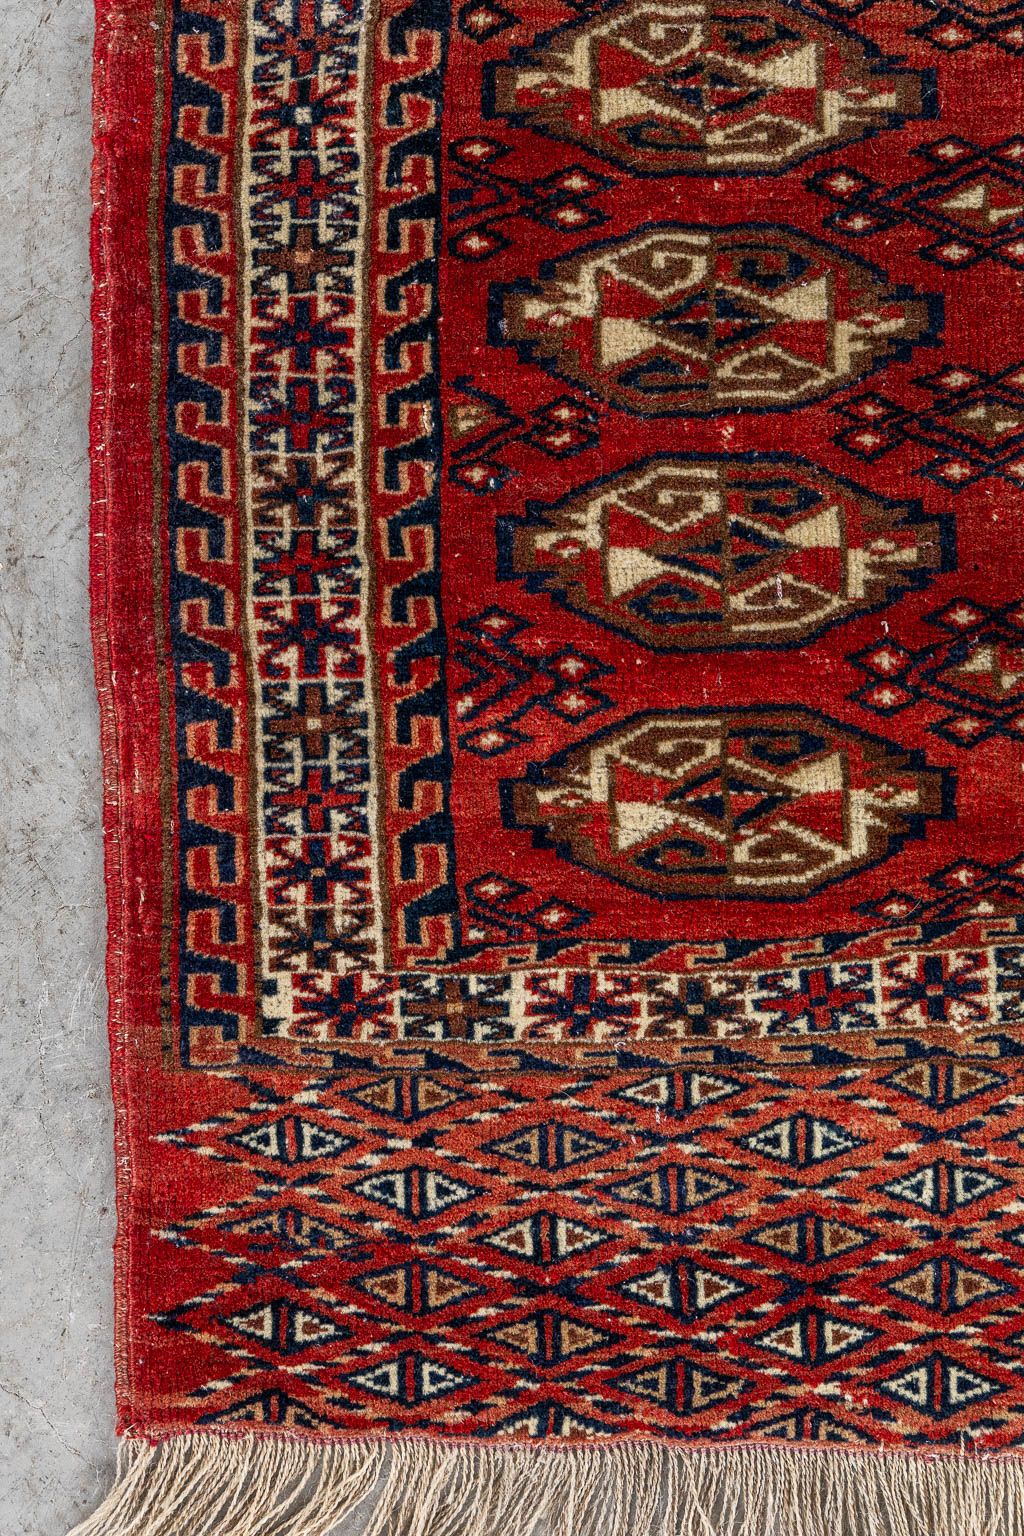 An Oriental hand-made carpet, Turkman Yomut. (L:70 x W:117 cm)